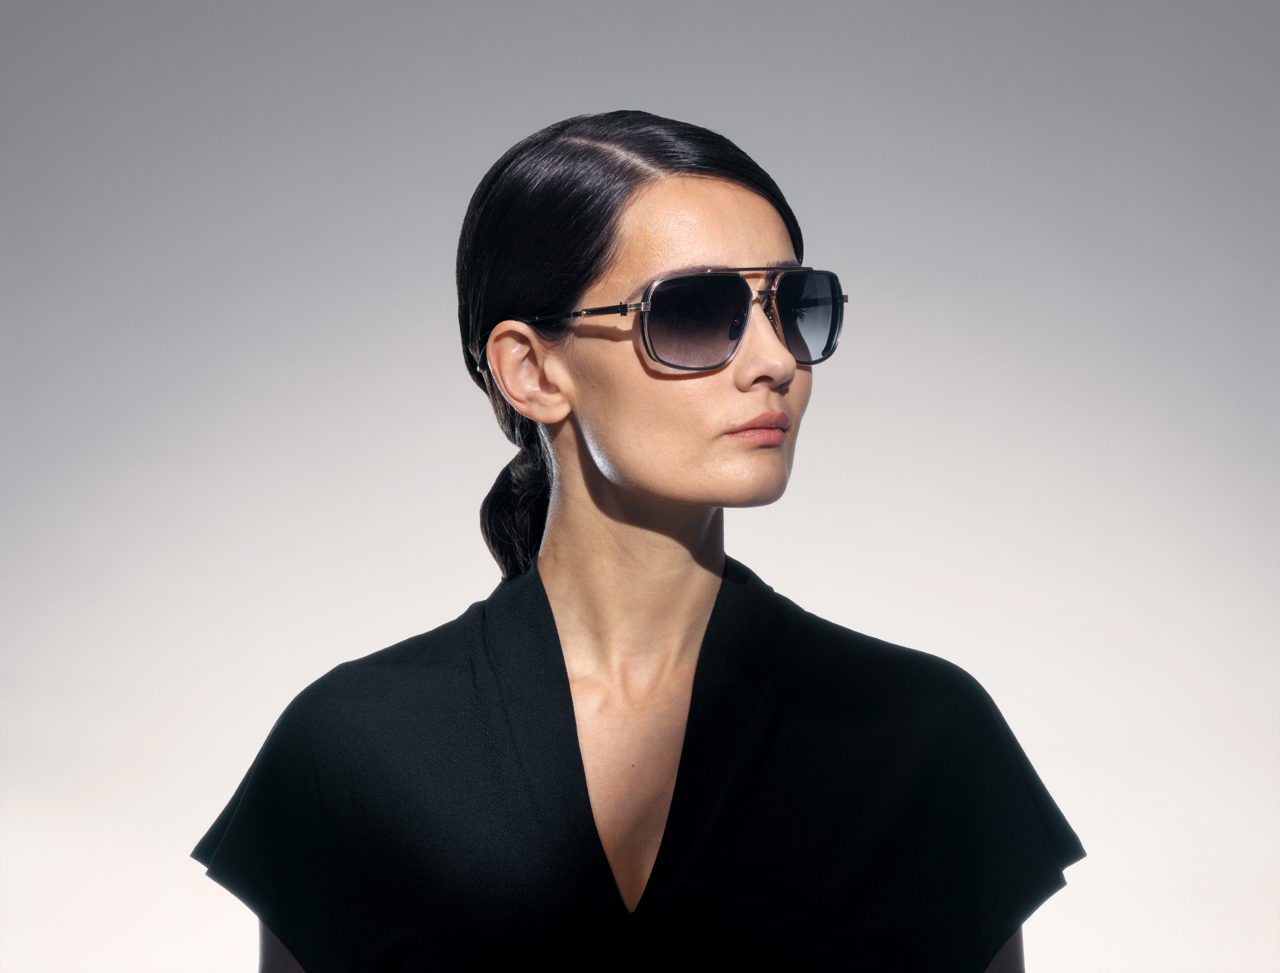 akoni pathfinder sunglasses lifestyle side female